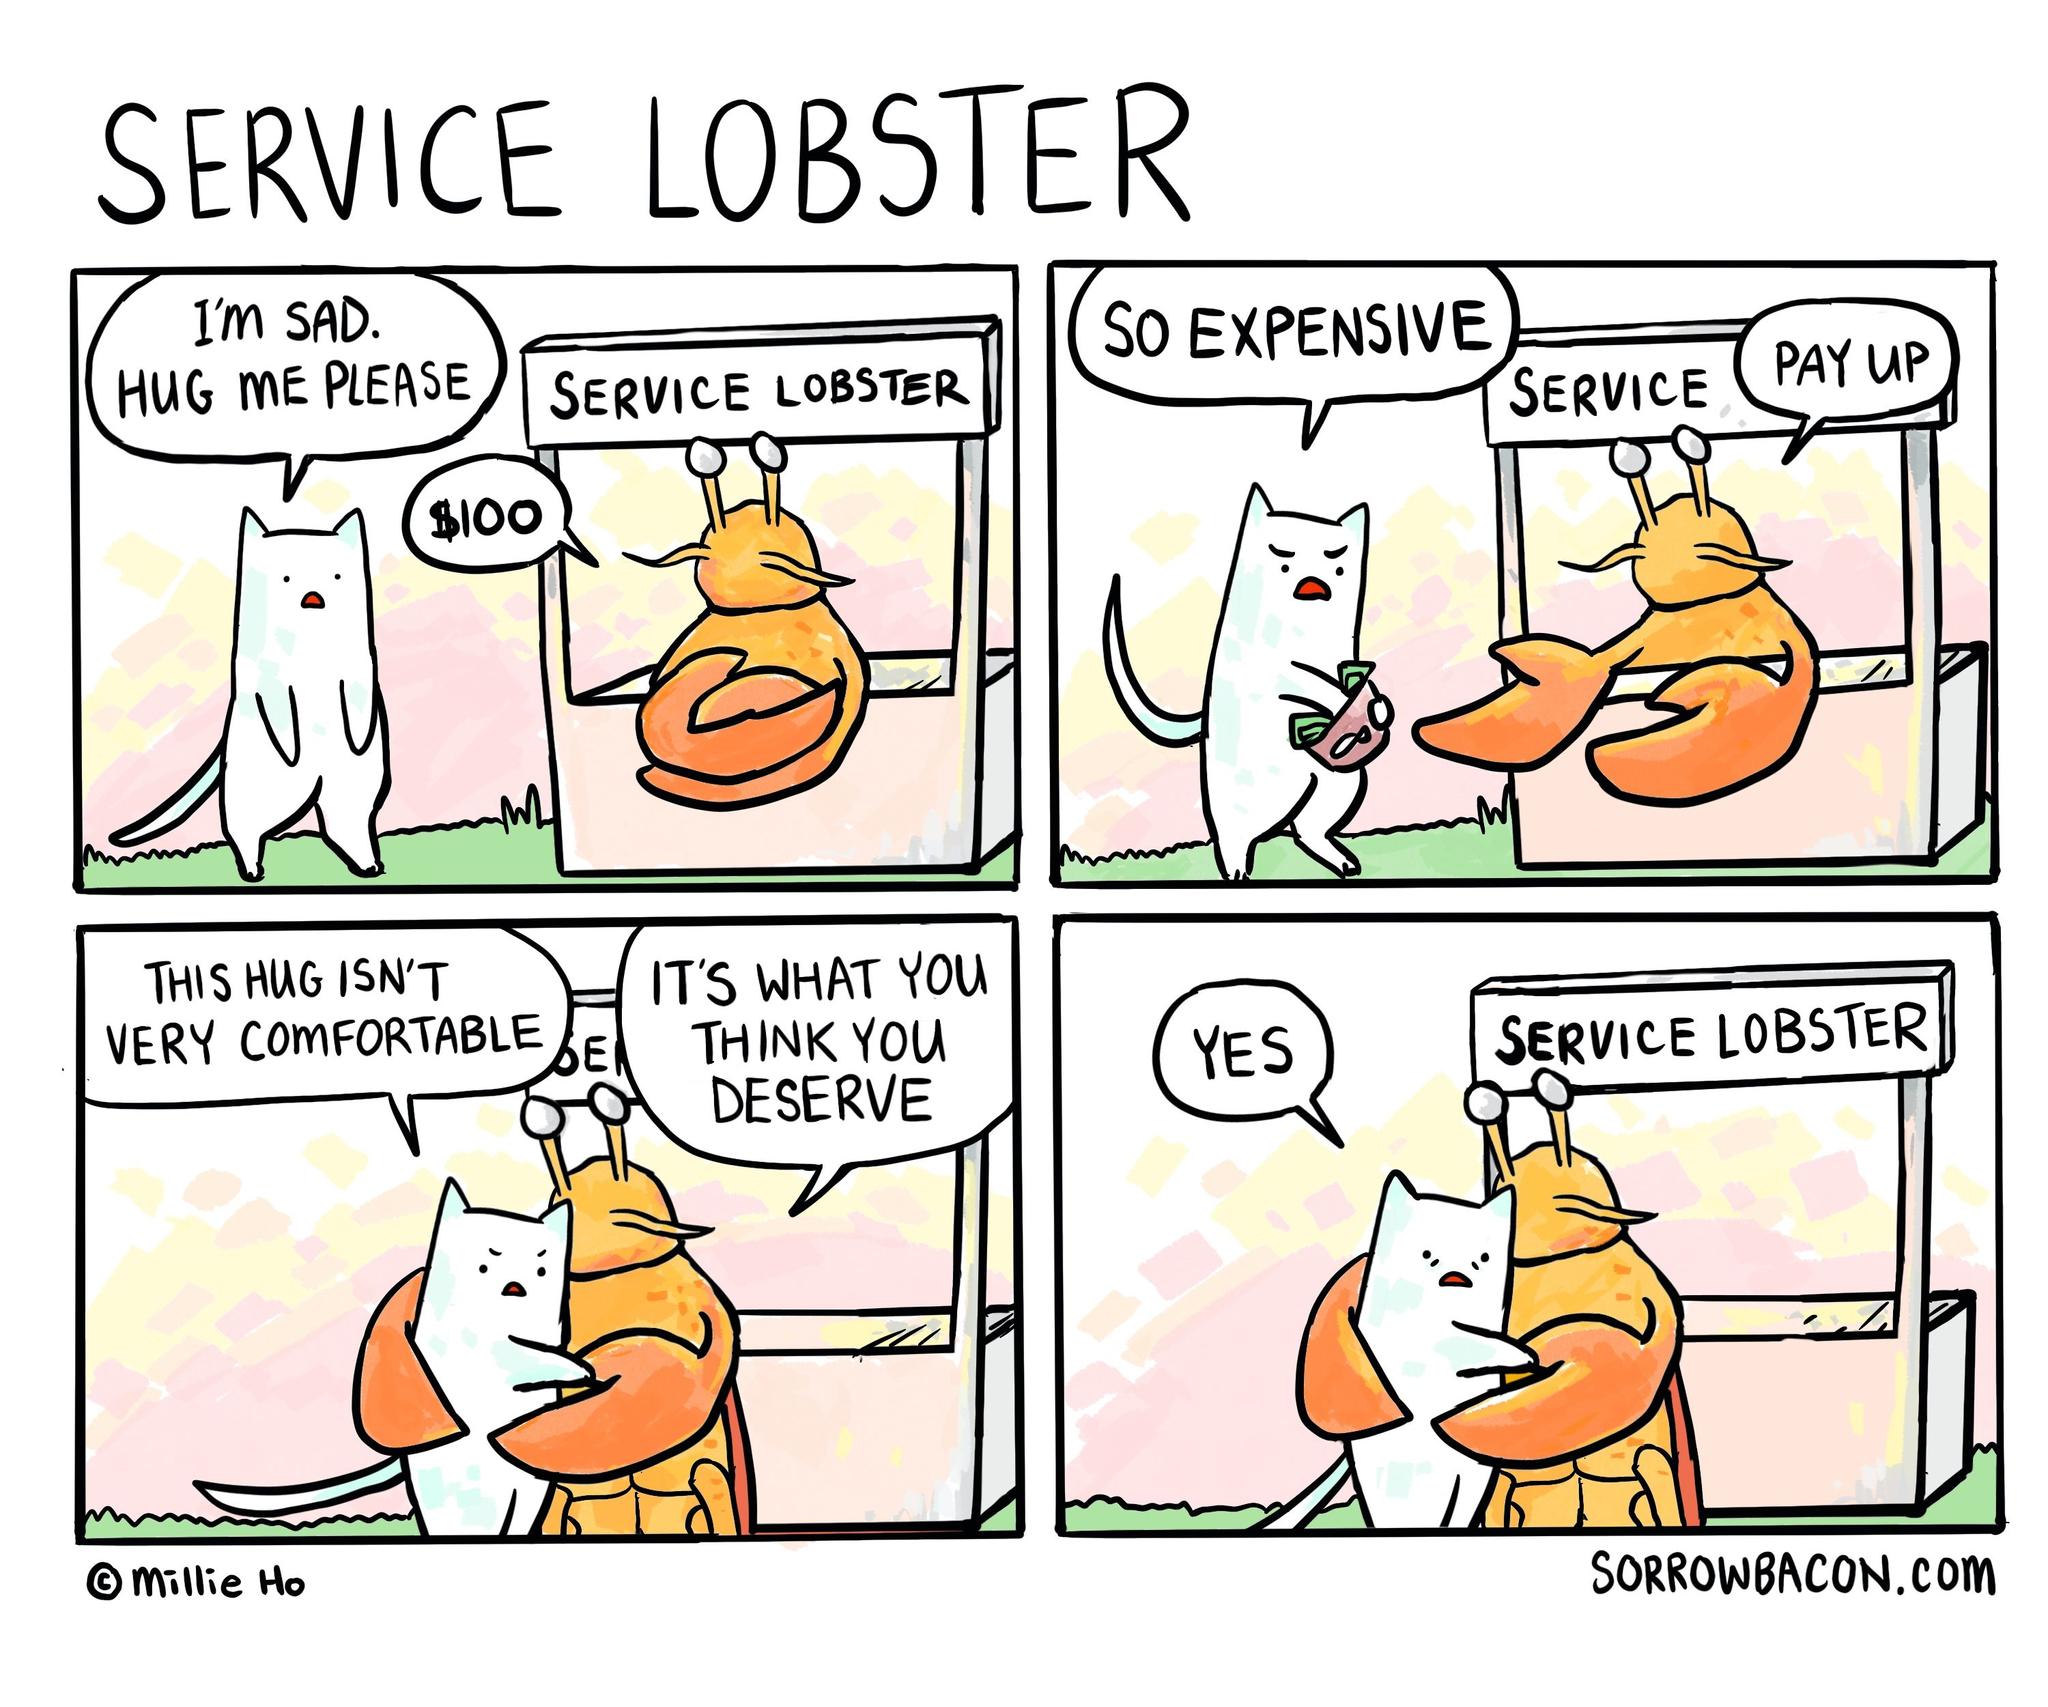 Service Lobster sorrowbacon comic